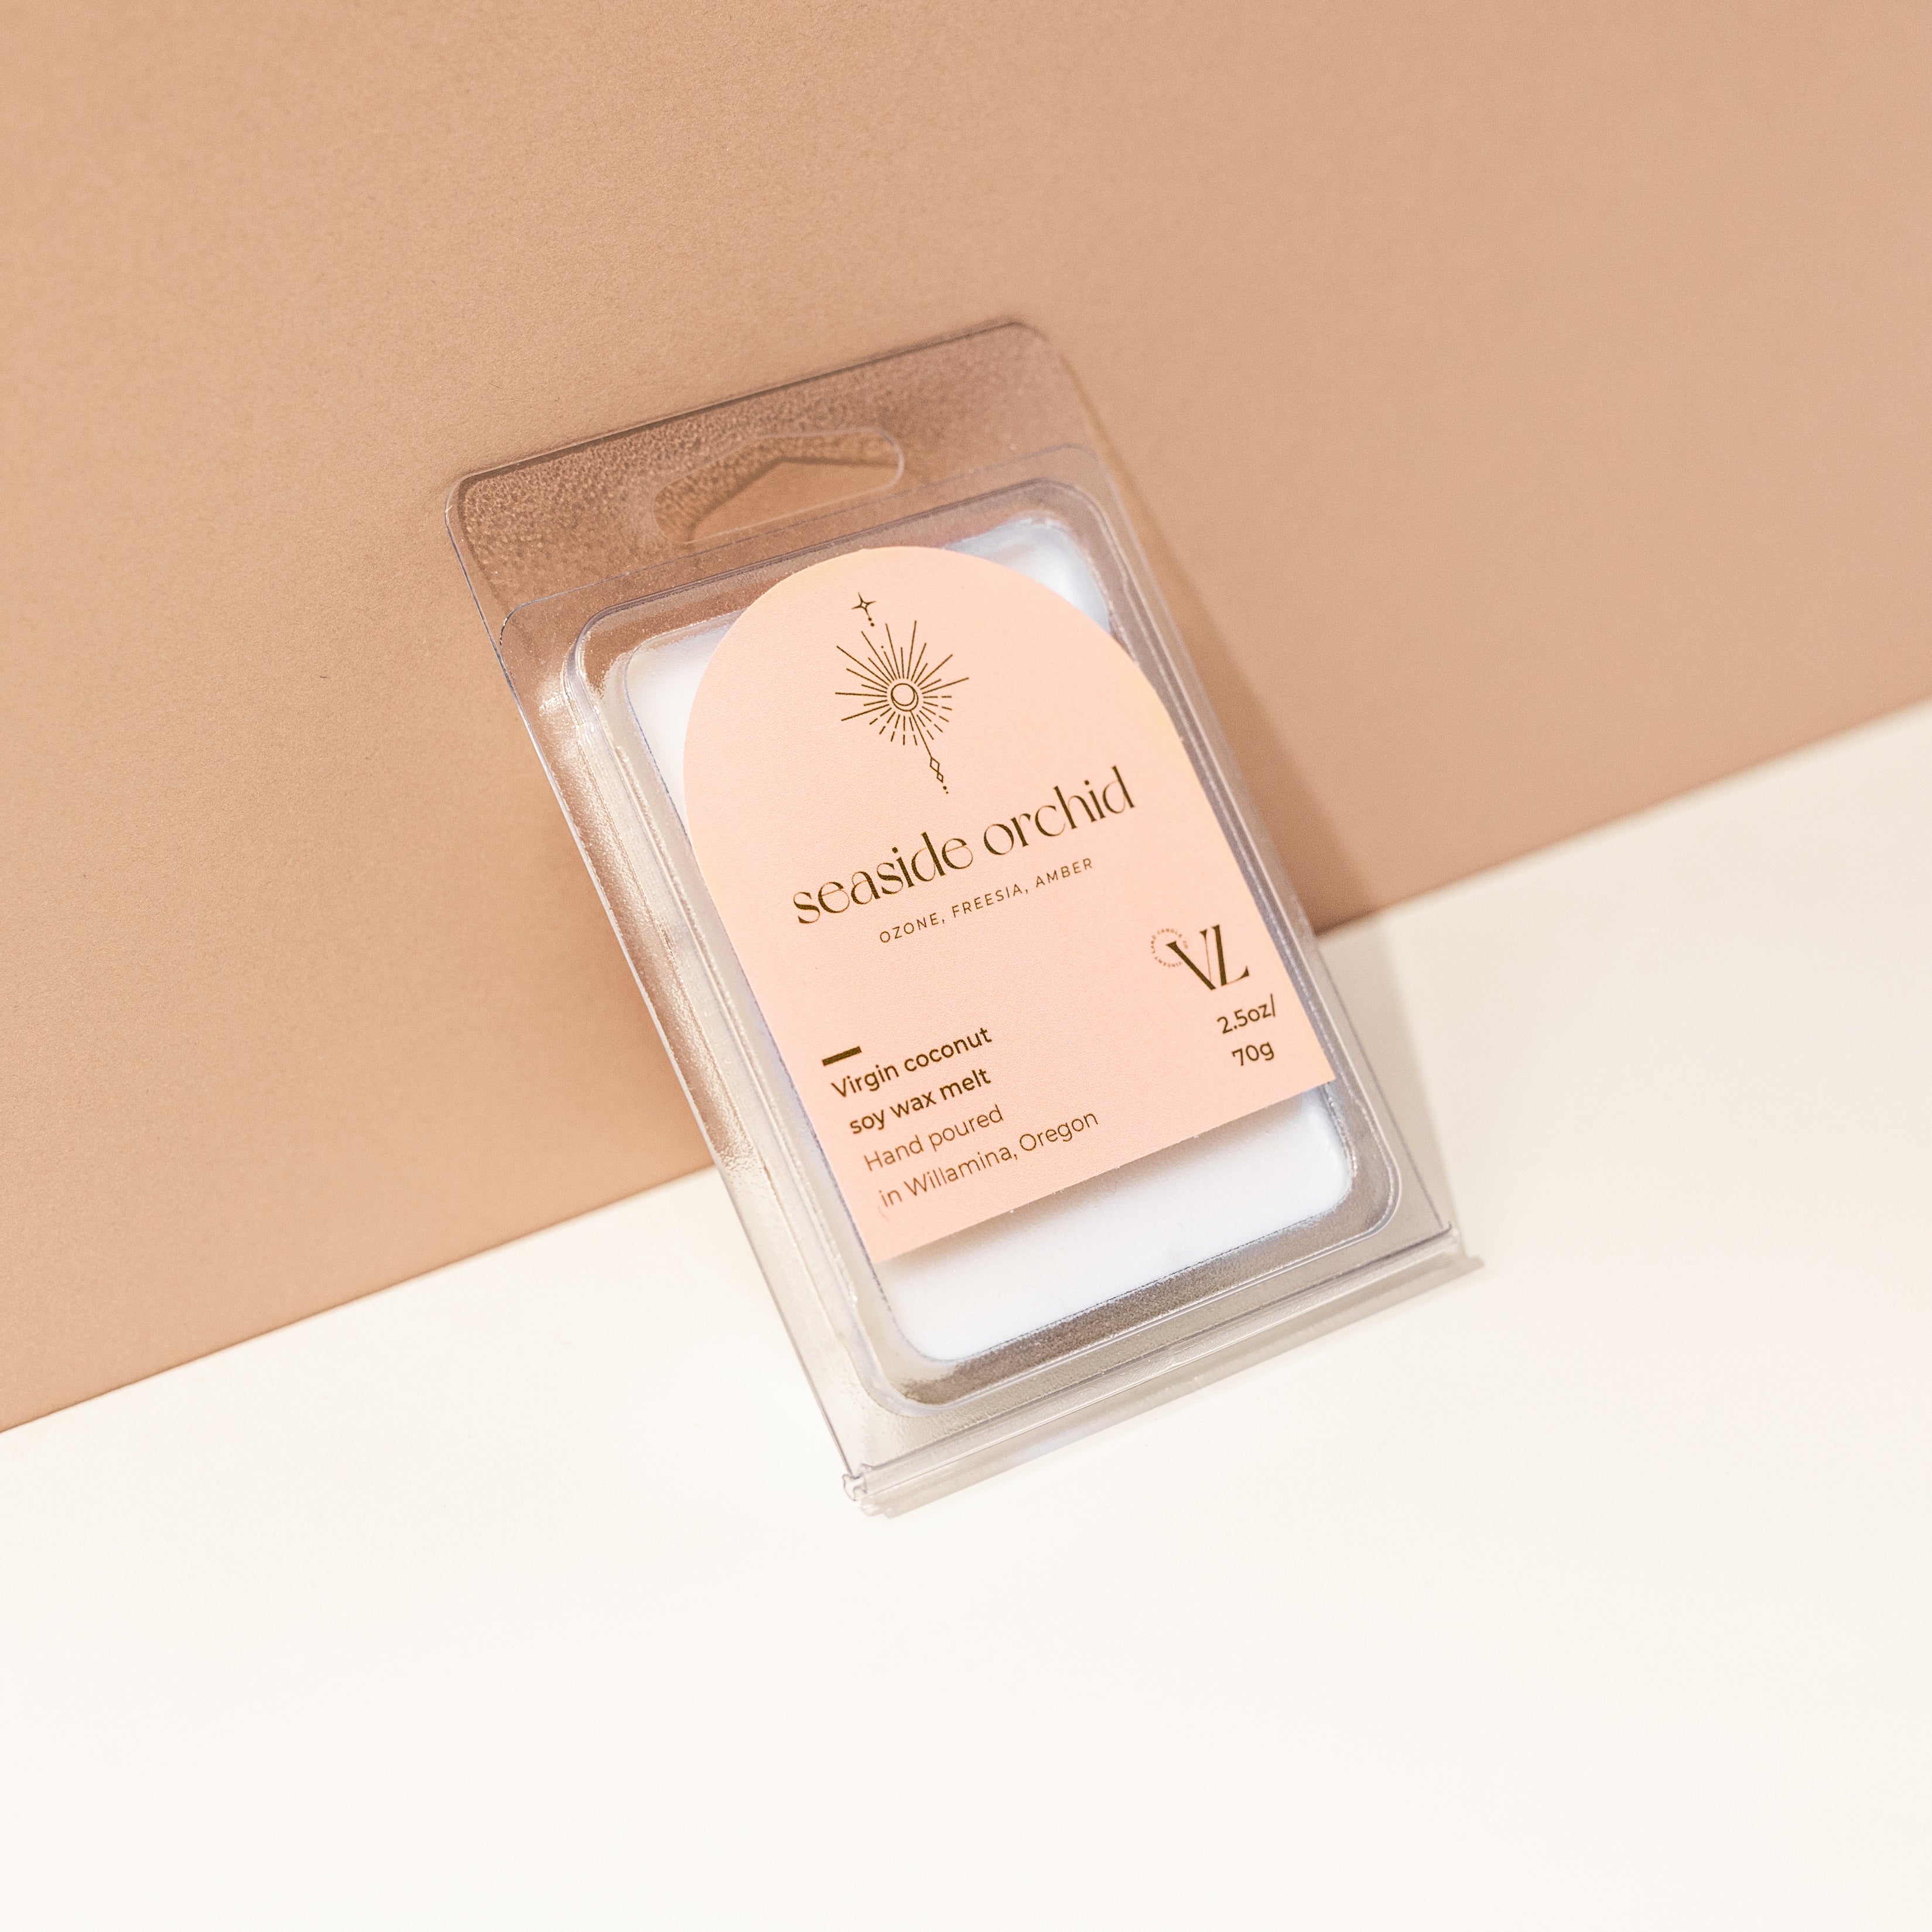 Amber & Sandalwood Wax Melt Single - Home Fragrance